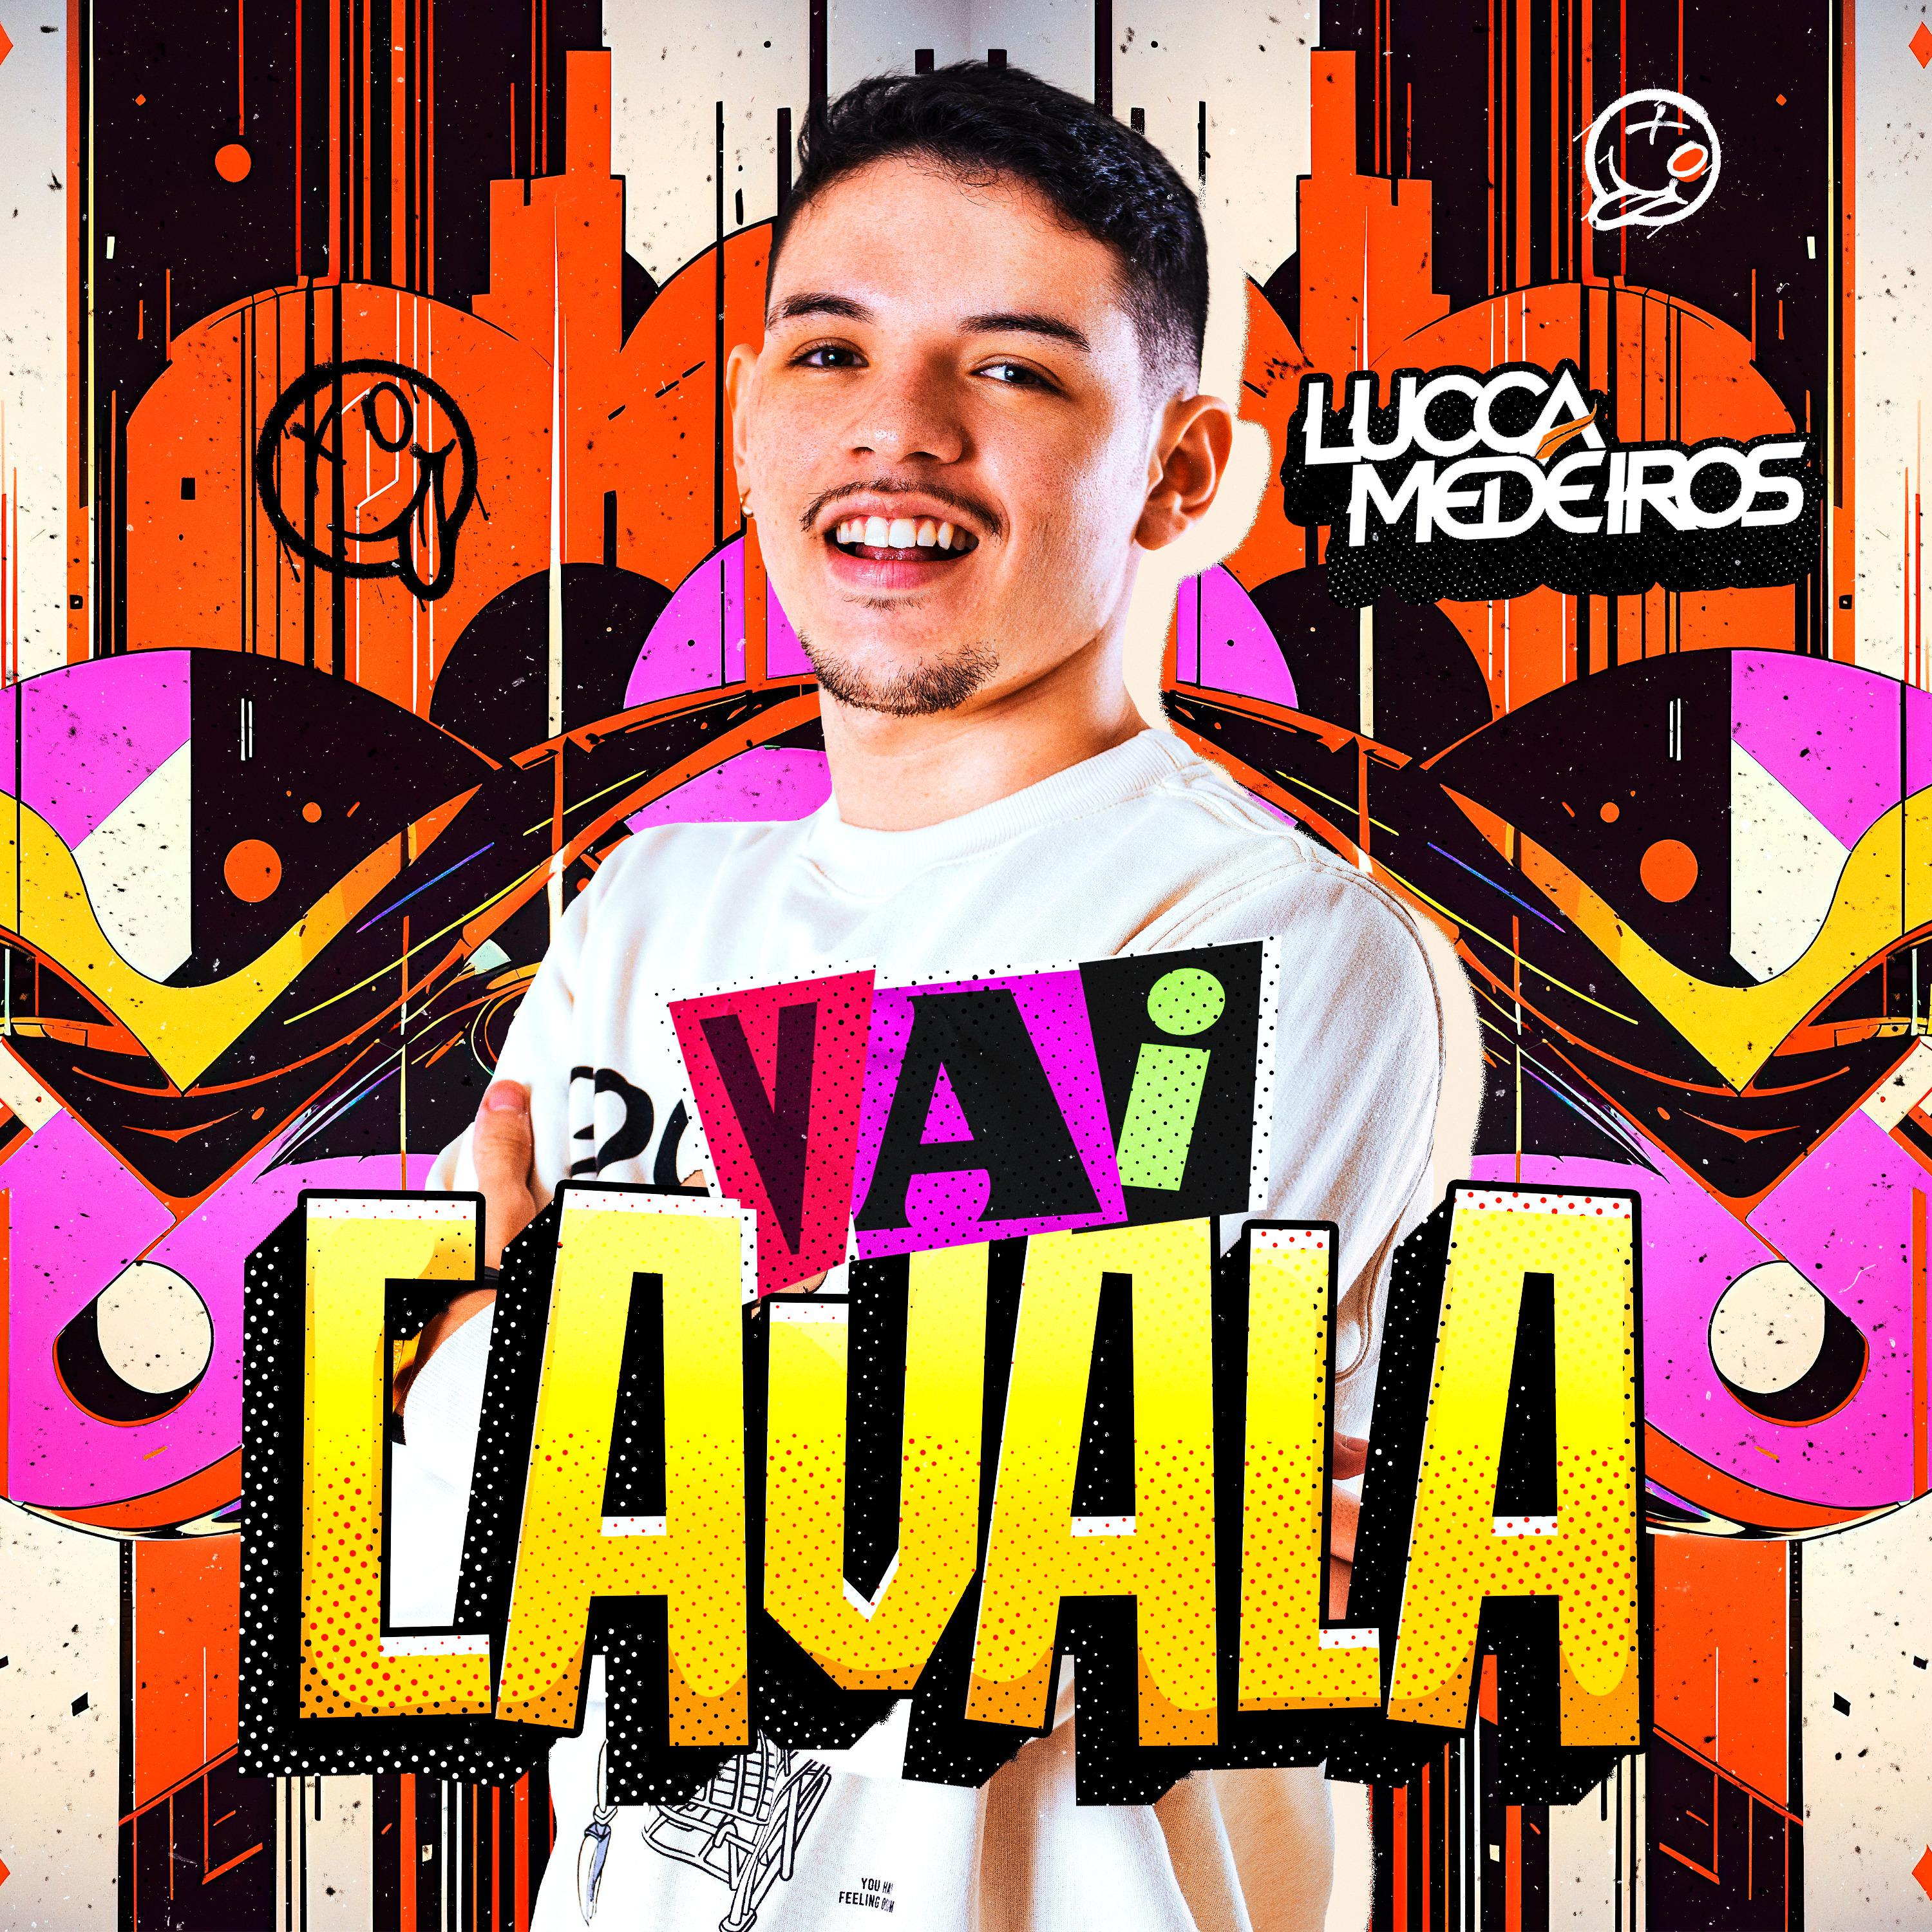 Постер альбома Vai Cavala